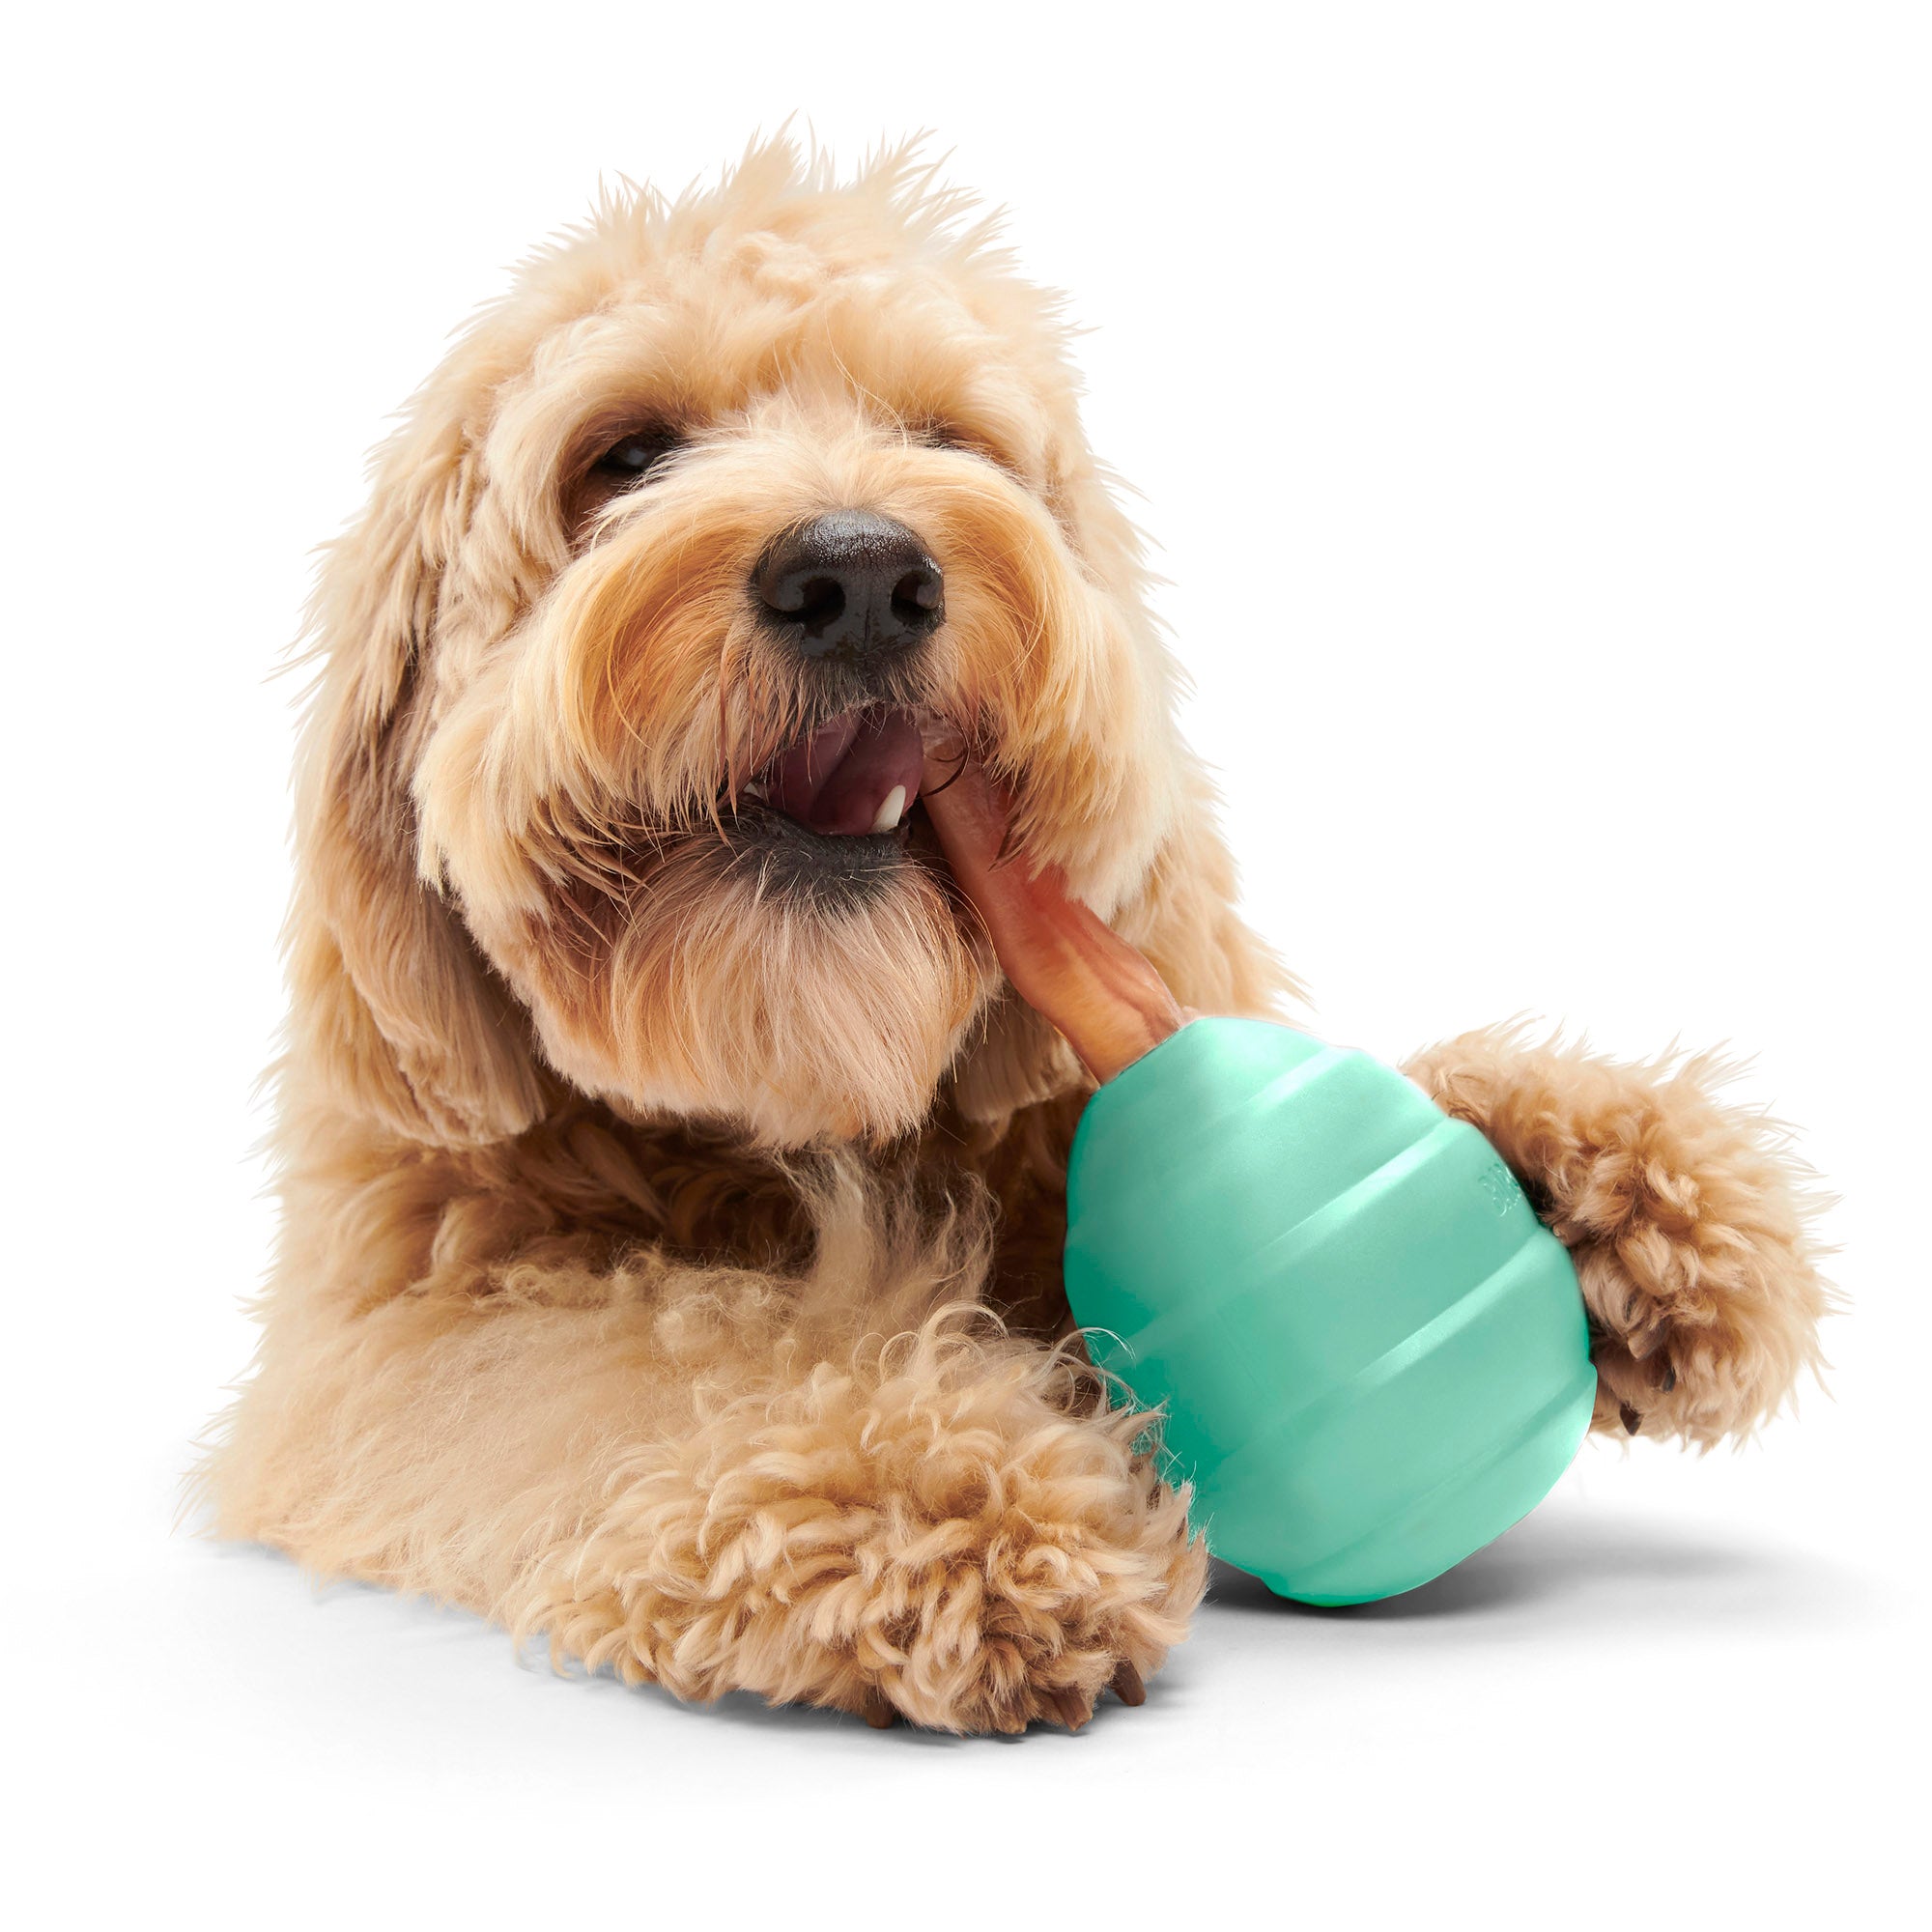 BARK Titan - Treat Dispensing Dog Toy